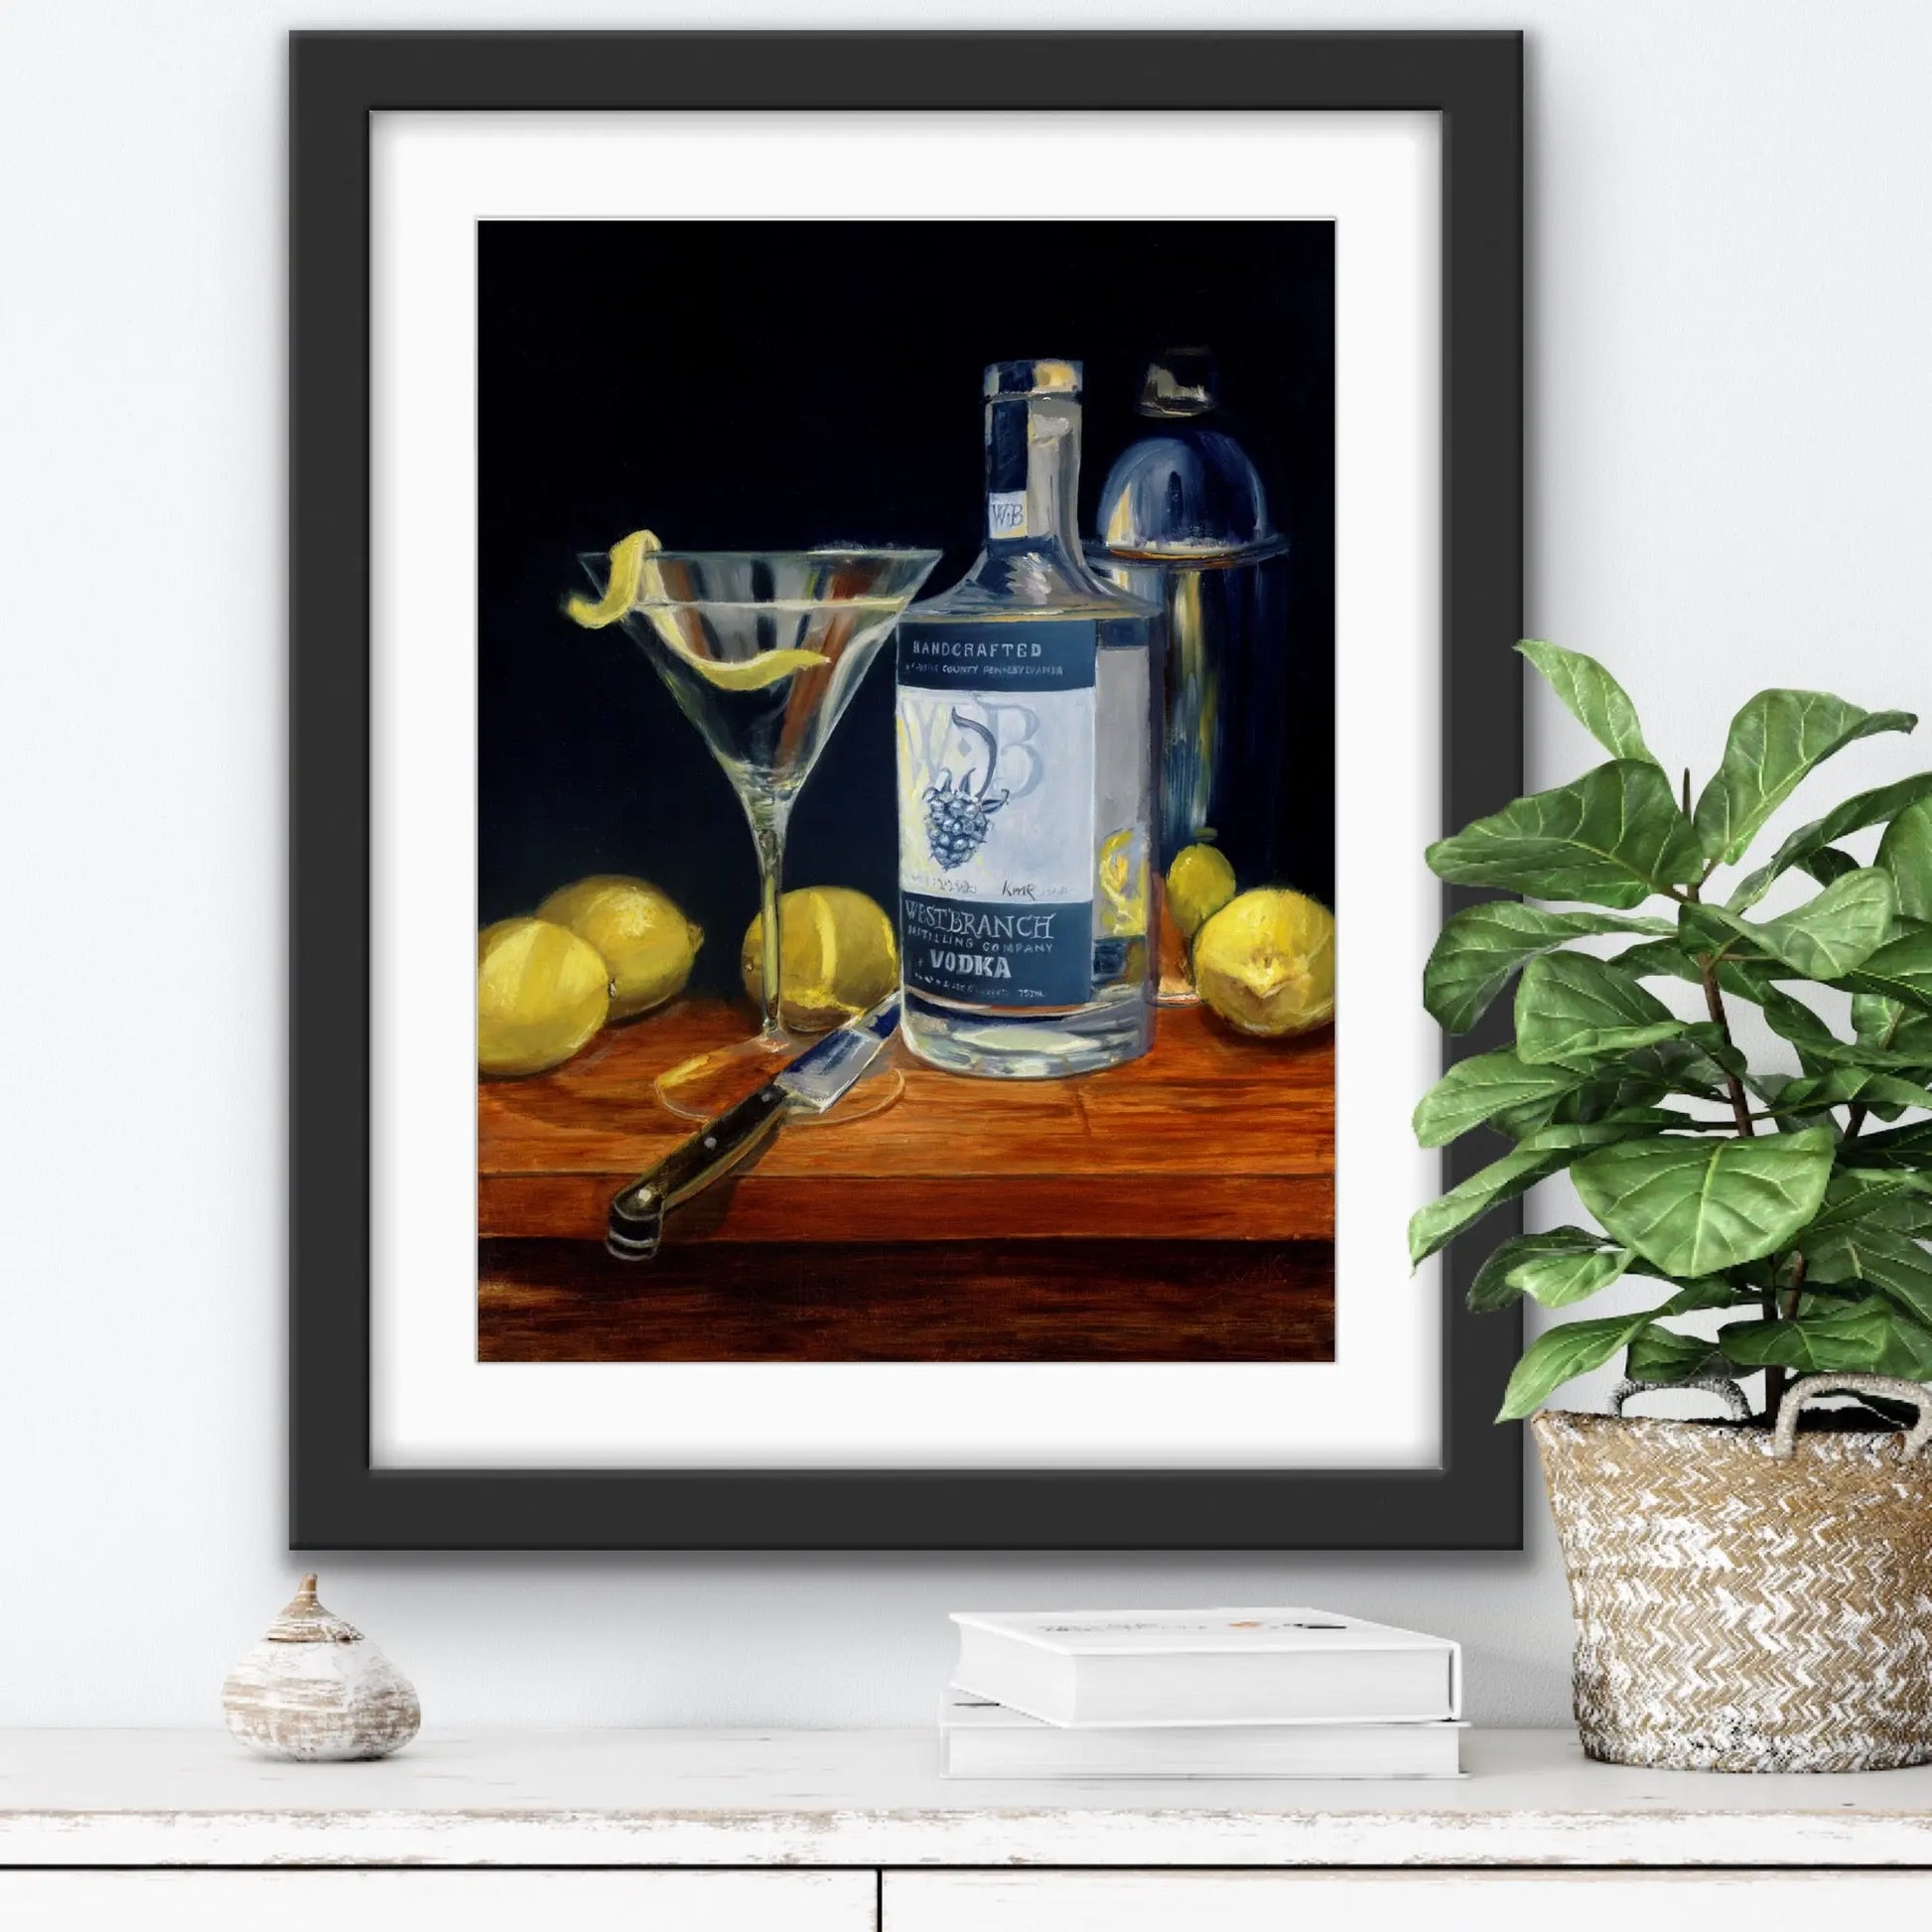 Premium Print - West Branch Vodka Martini - Max Savaiko Art